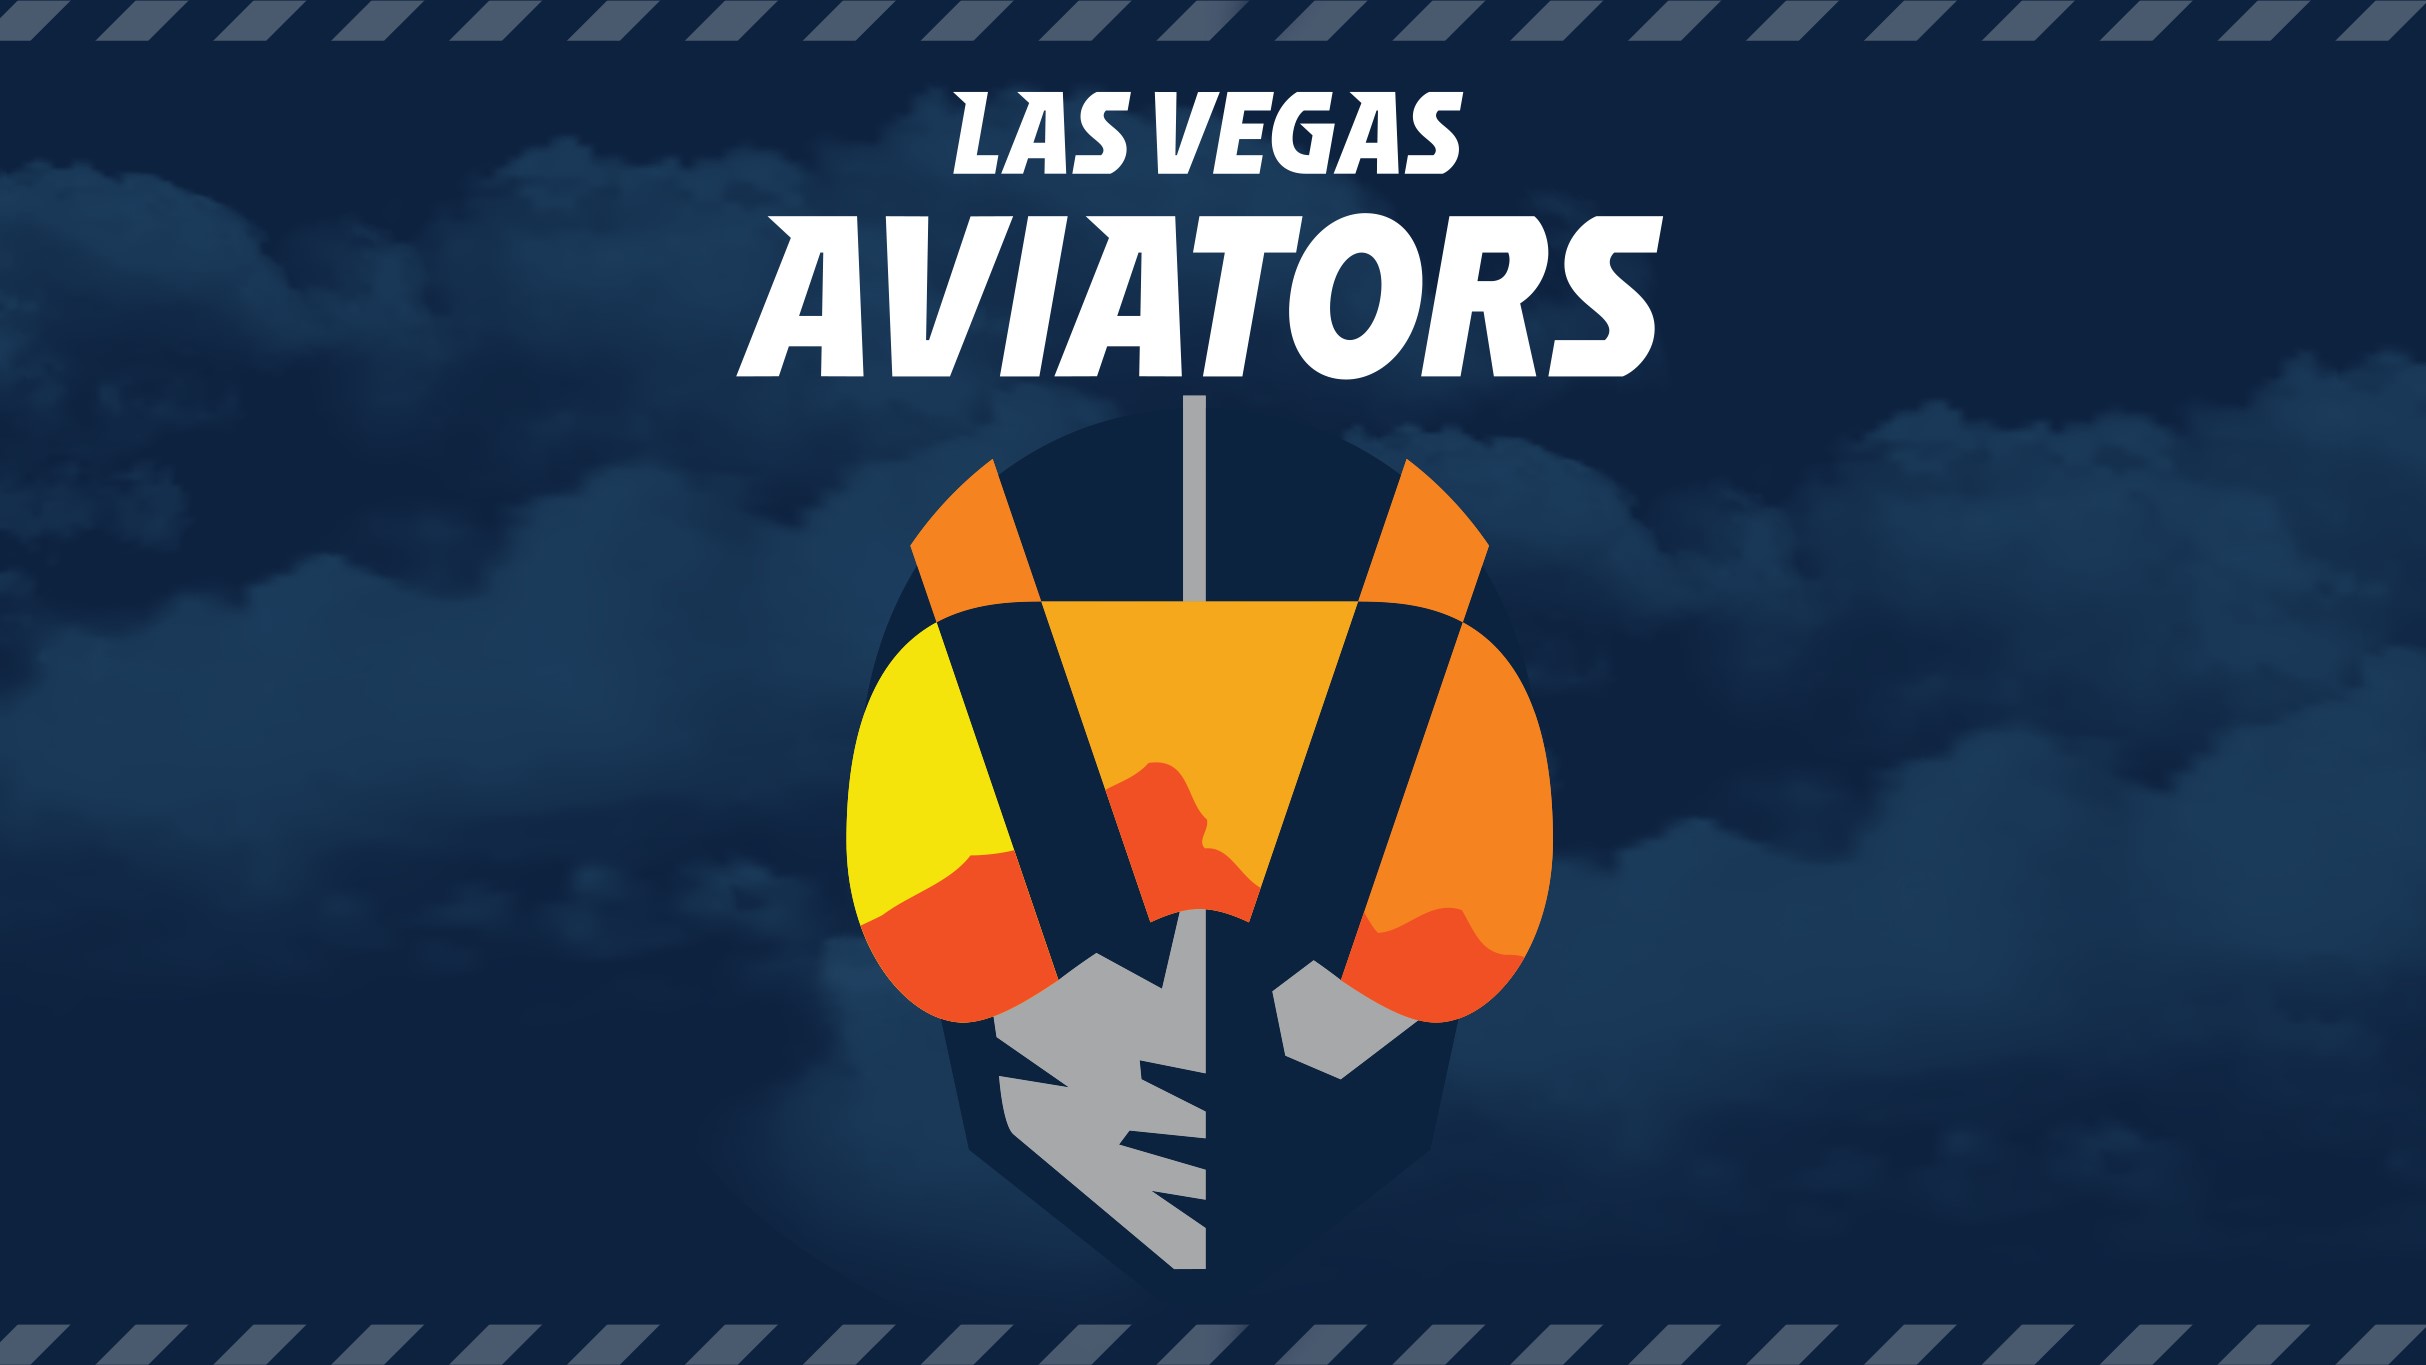 Las Vegas Aviators vs. Salt Lake Bees